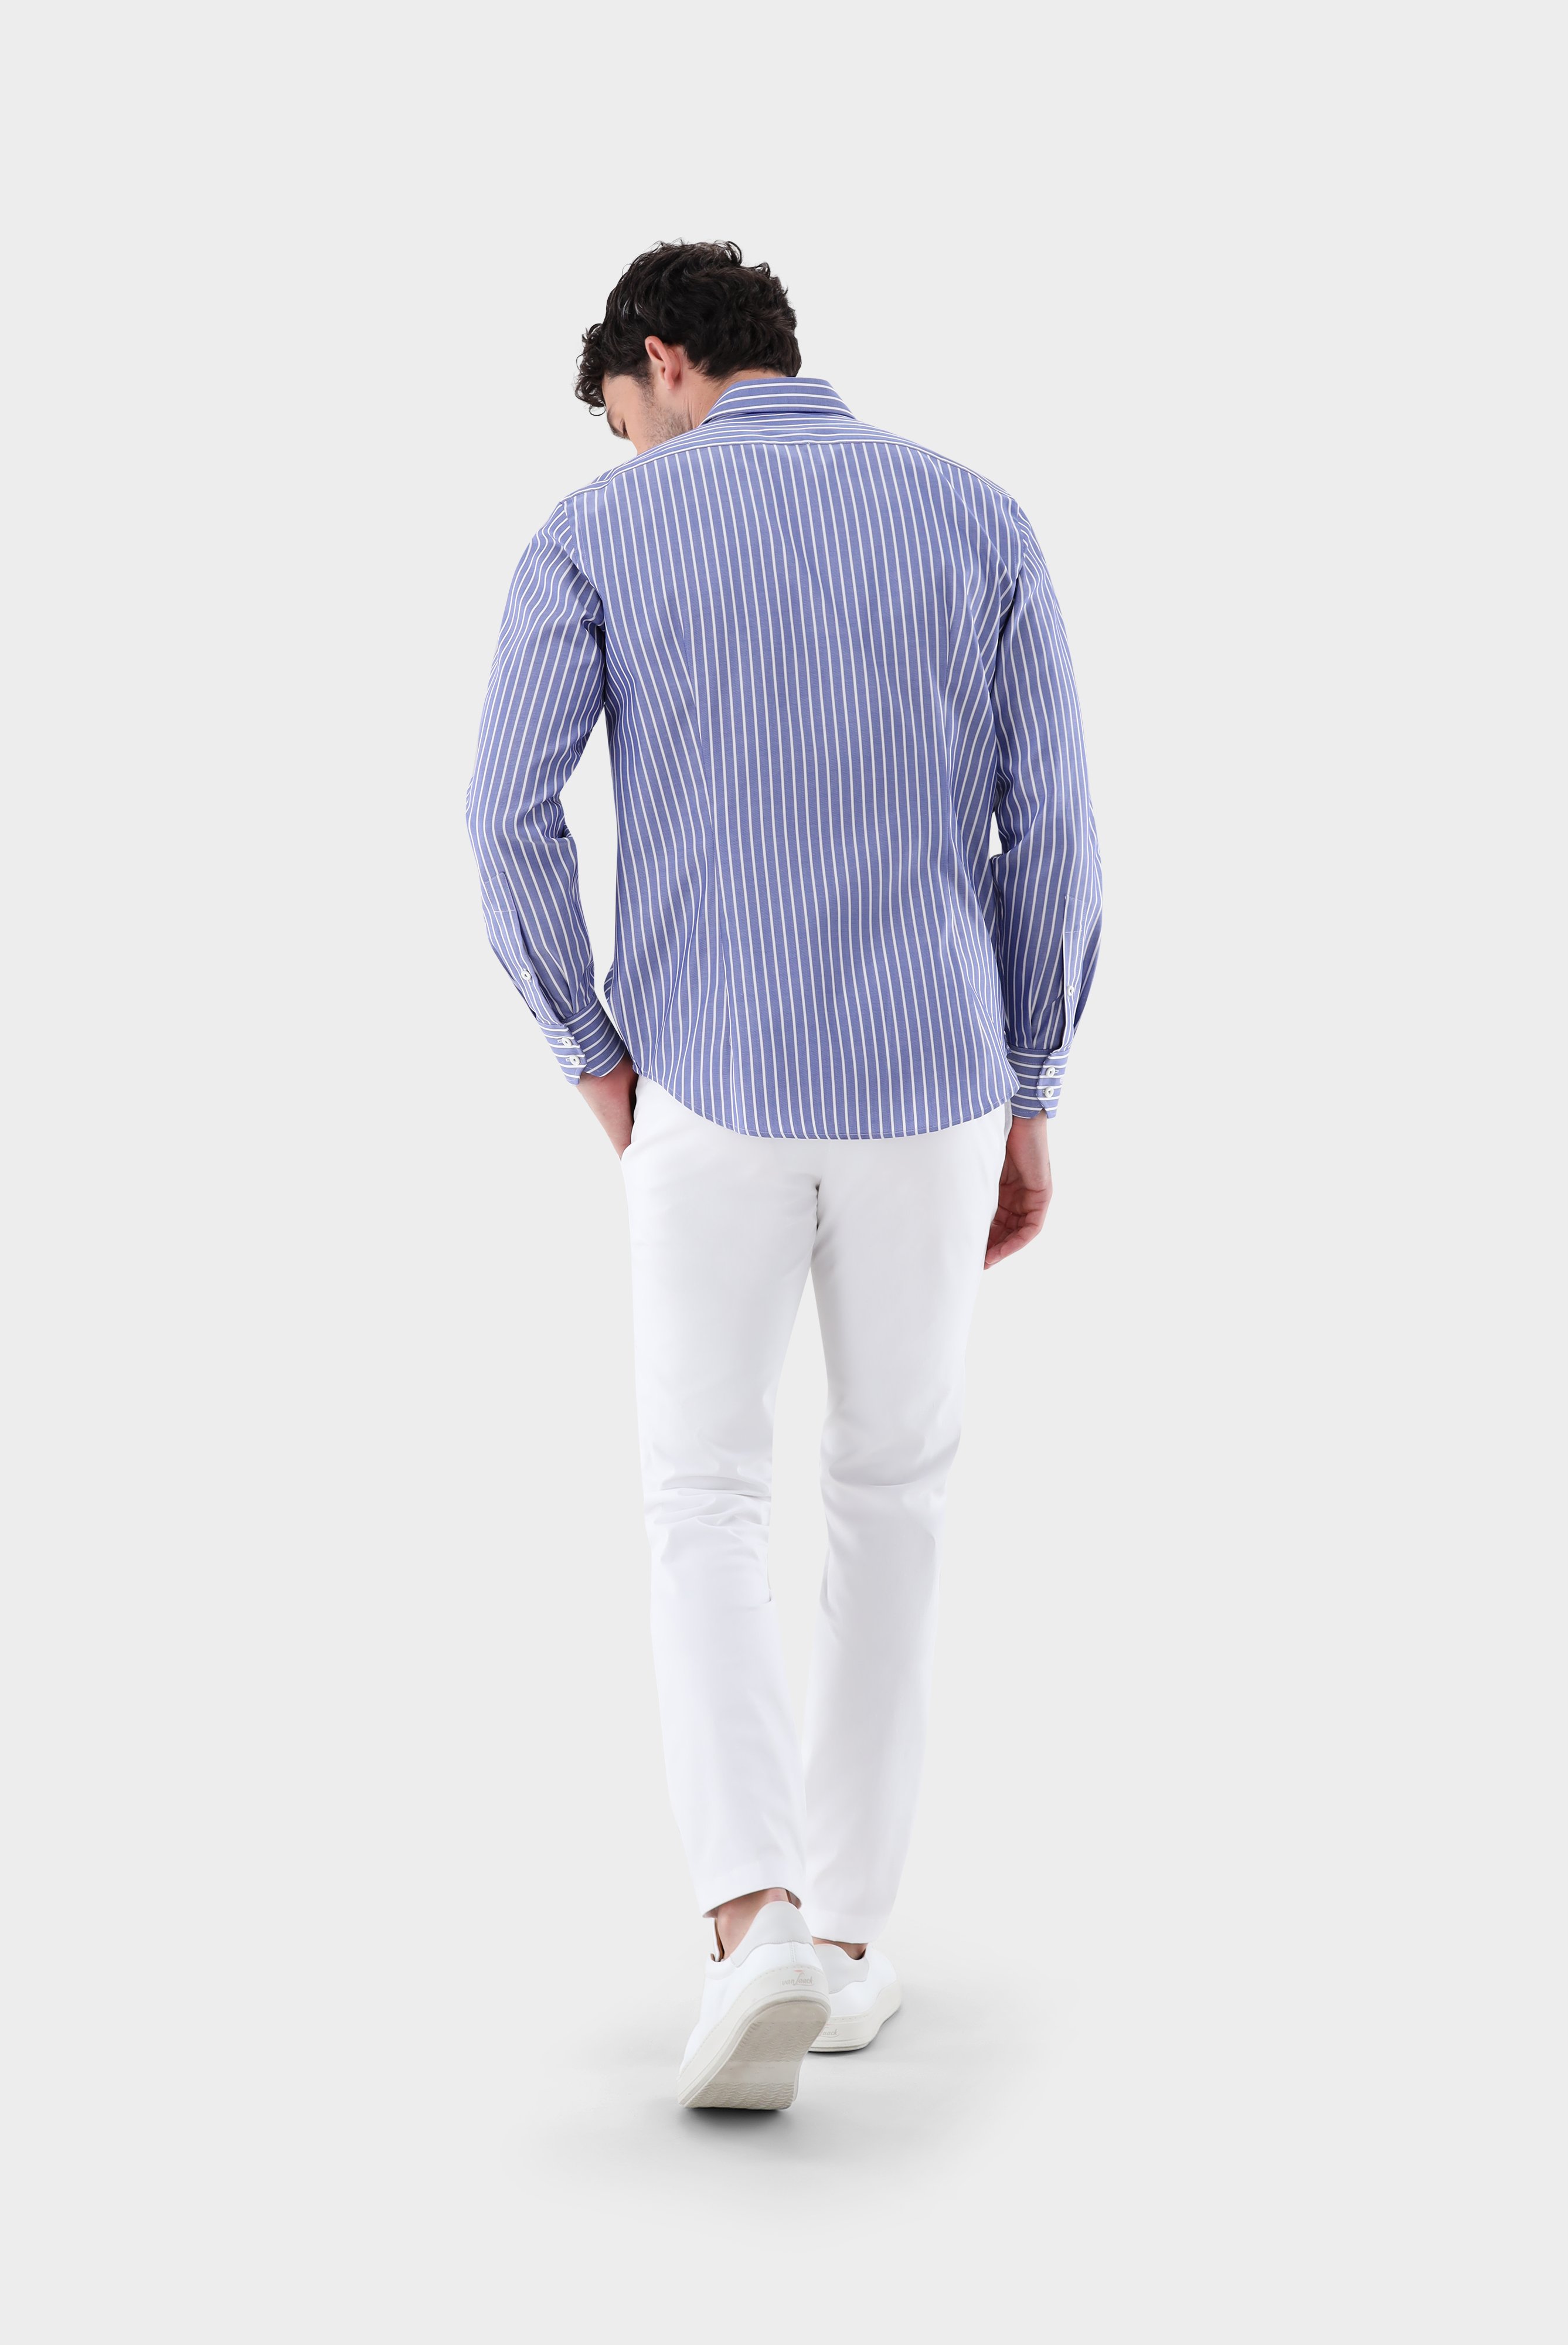 Casual Shirts+Striped Oxford Shirt Comfort Fit+20.2026.AV.151956.770.39